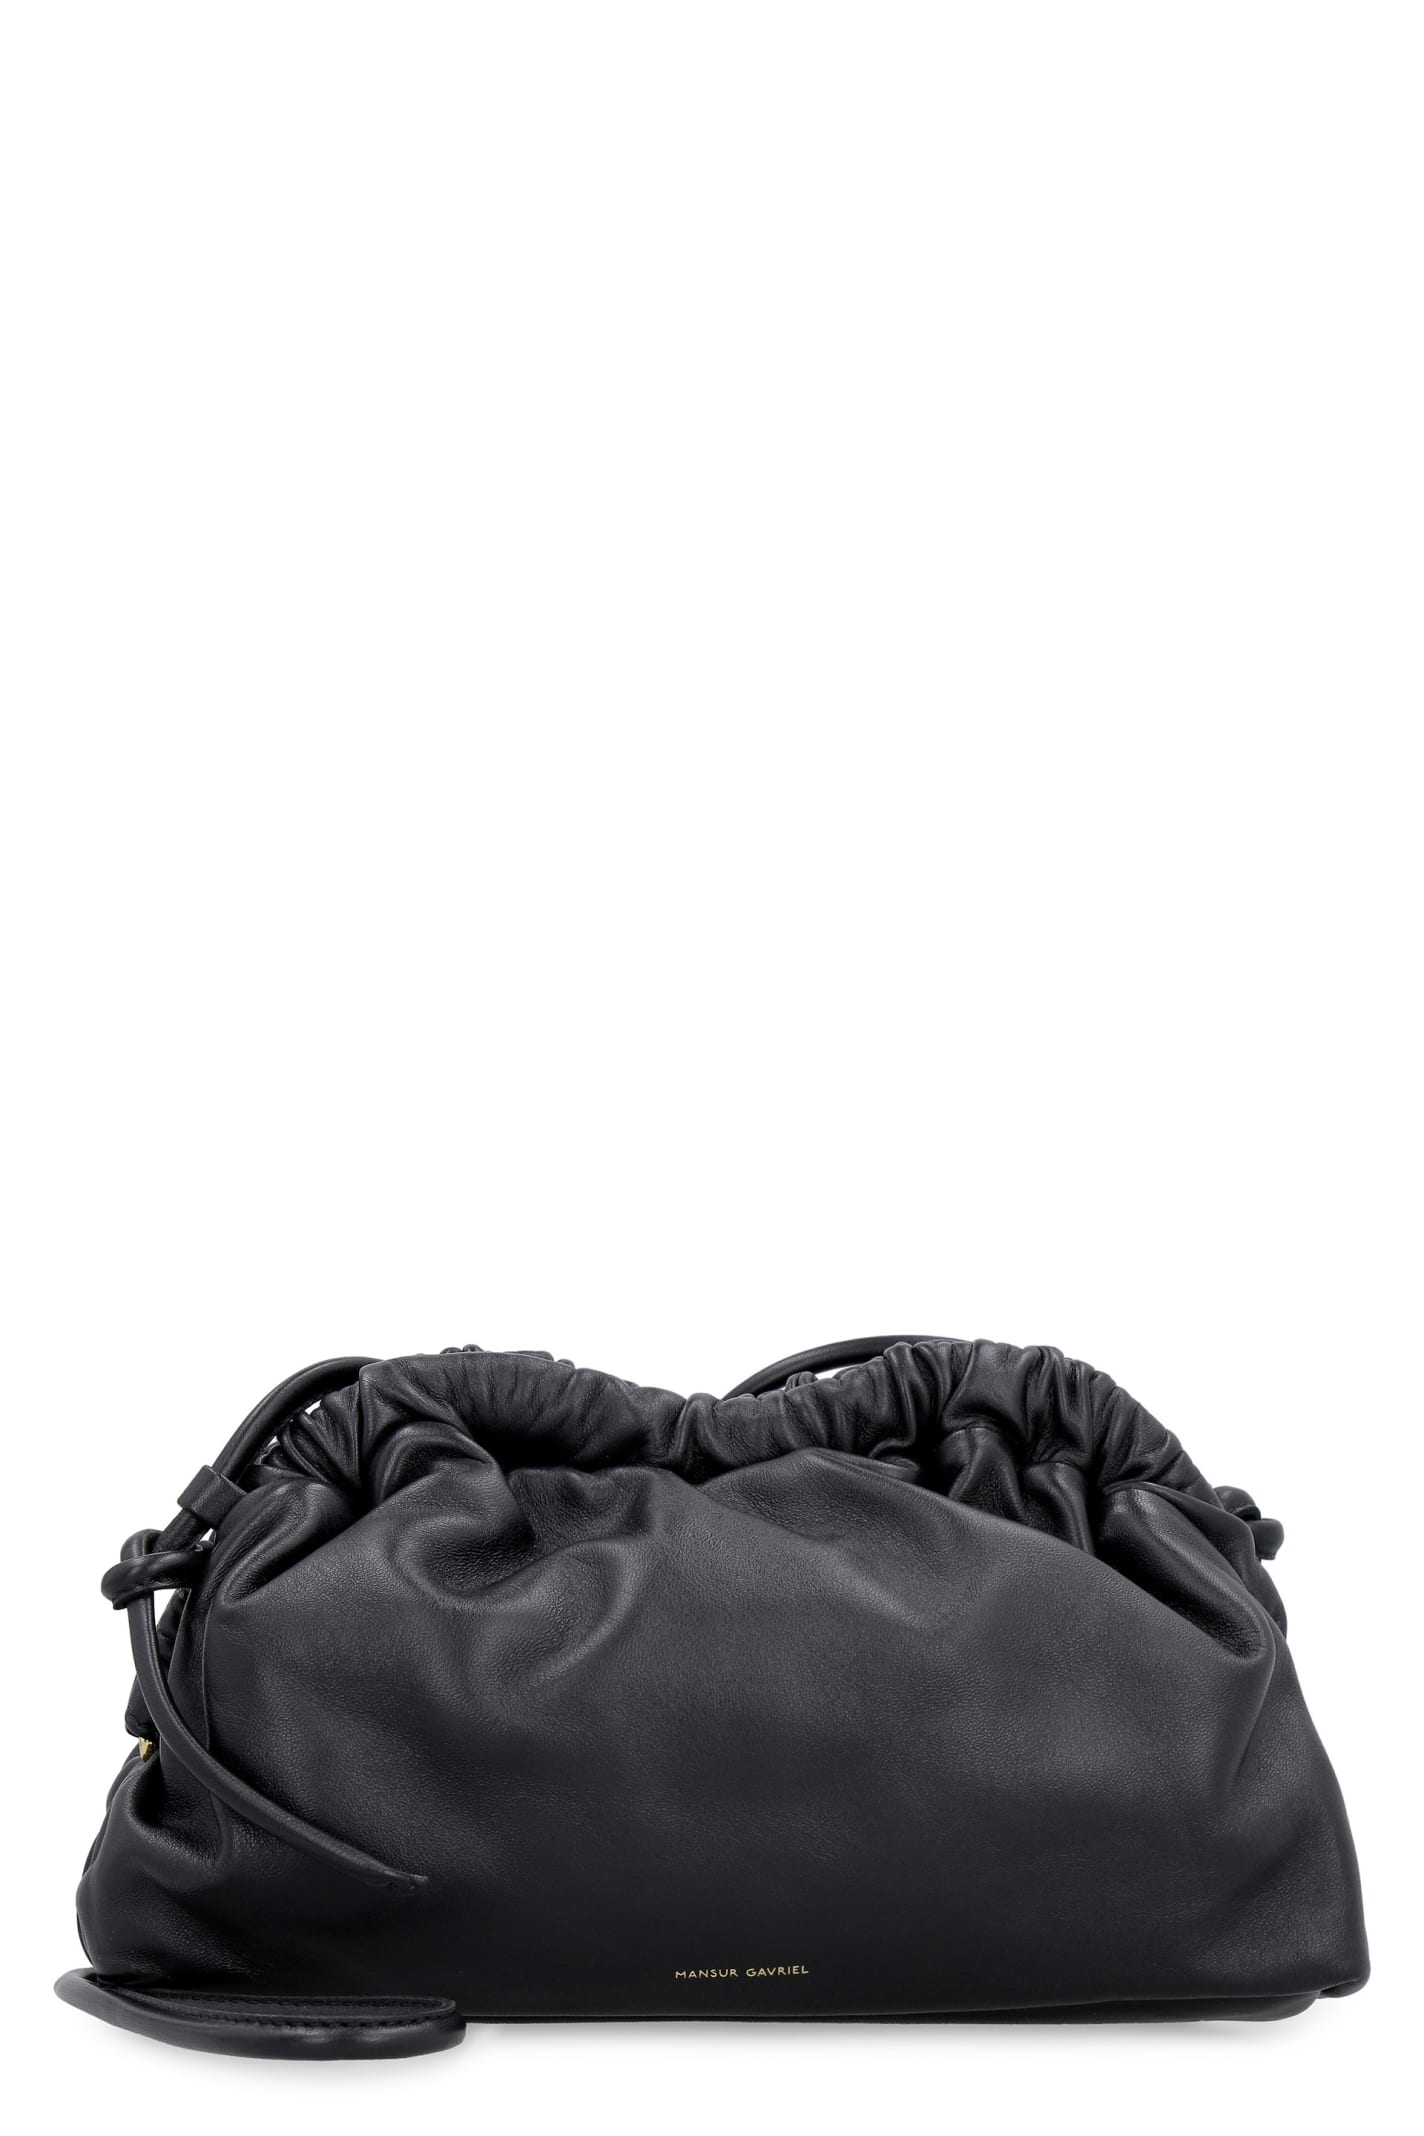 Mansur Gavriel Mini Cloud Leather Crossbody Bag